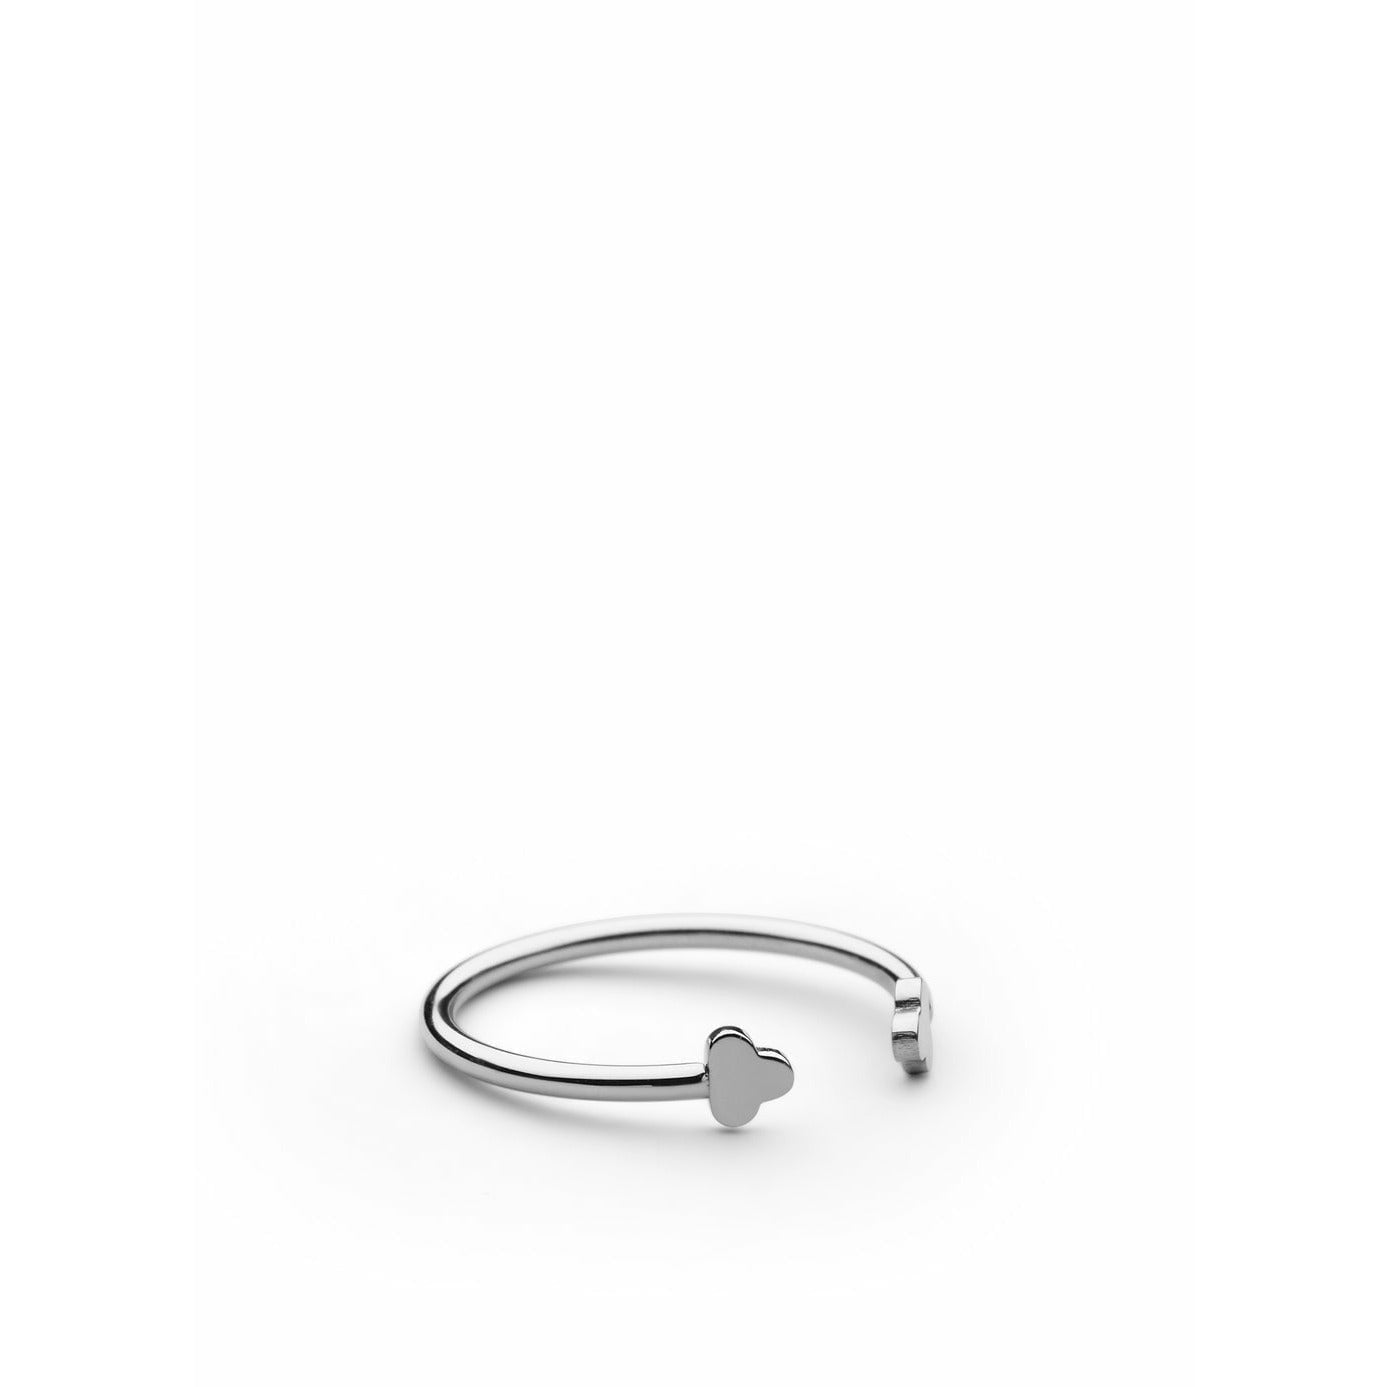 Skultuna Open Key Ring mittelgroßen Stahl Ø1,73 cm